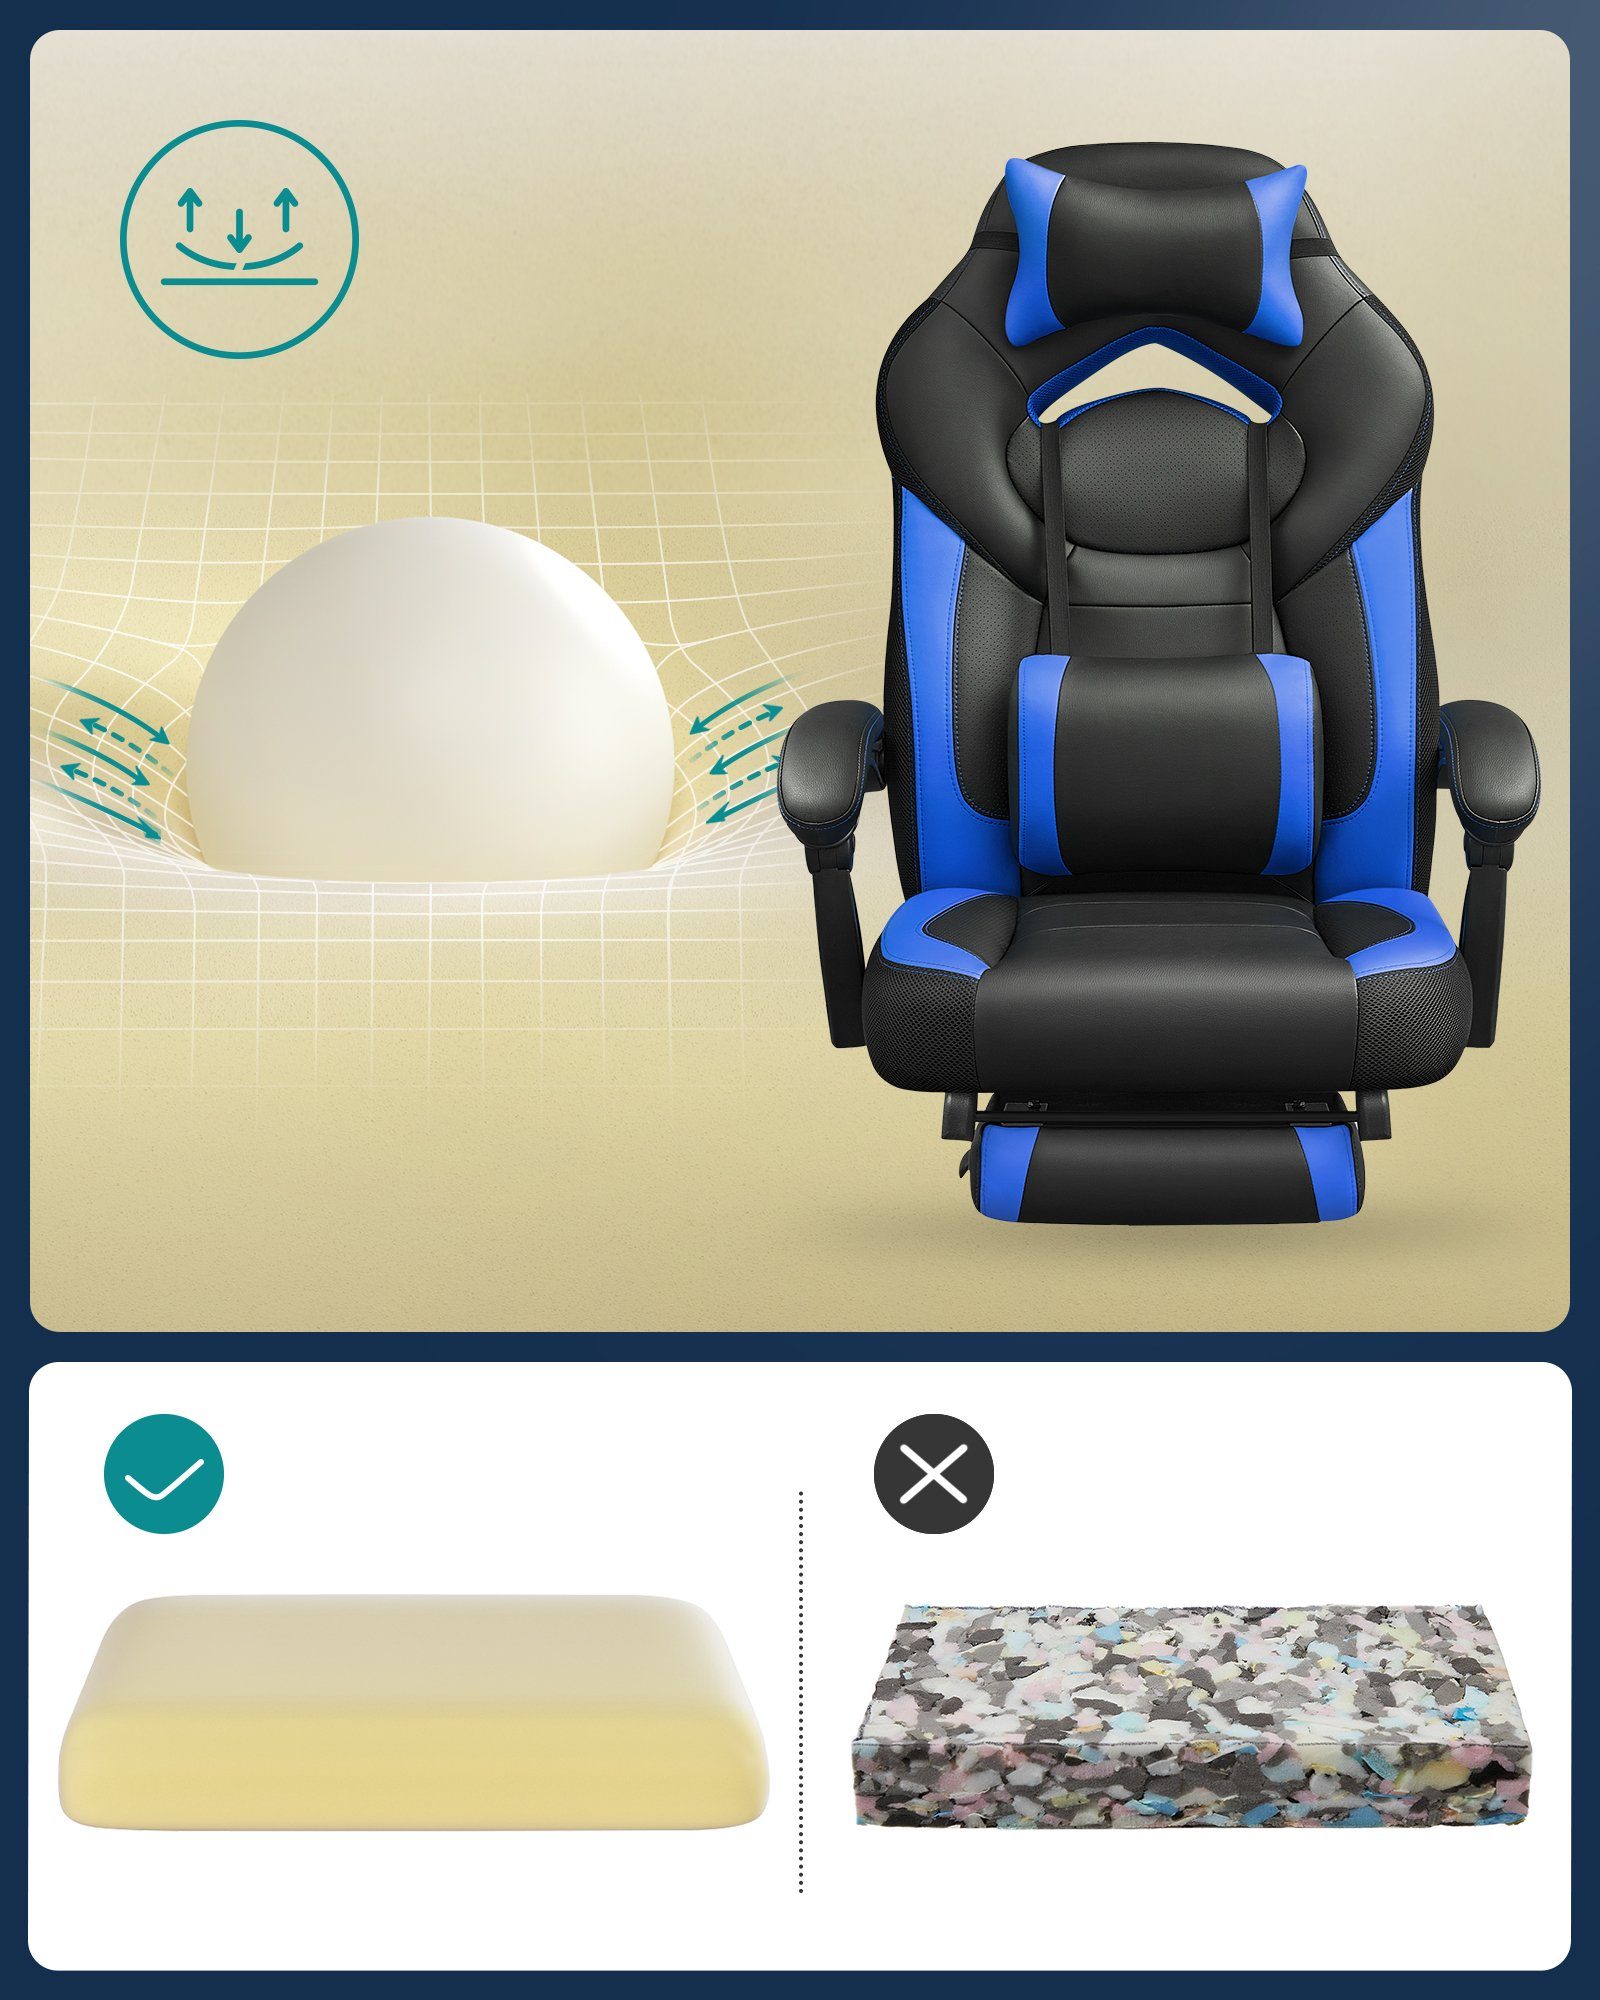 blau höhenverstellbar, Bürostuhl, SONGMICS Home-Office Gaming-Stuhl,